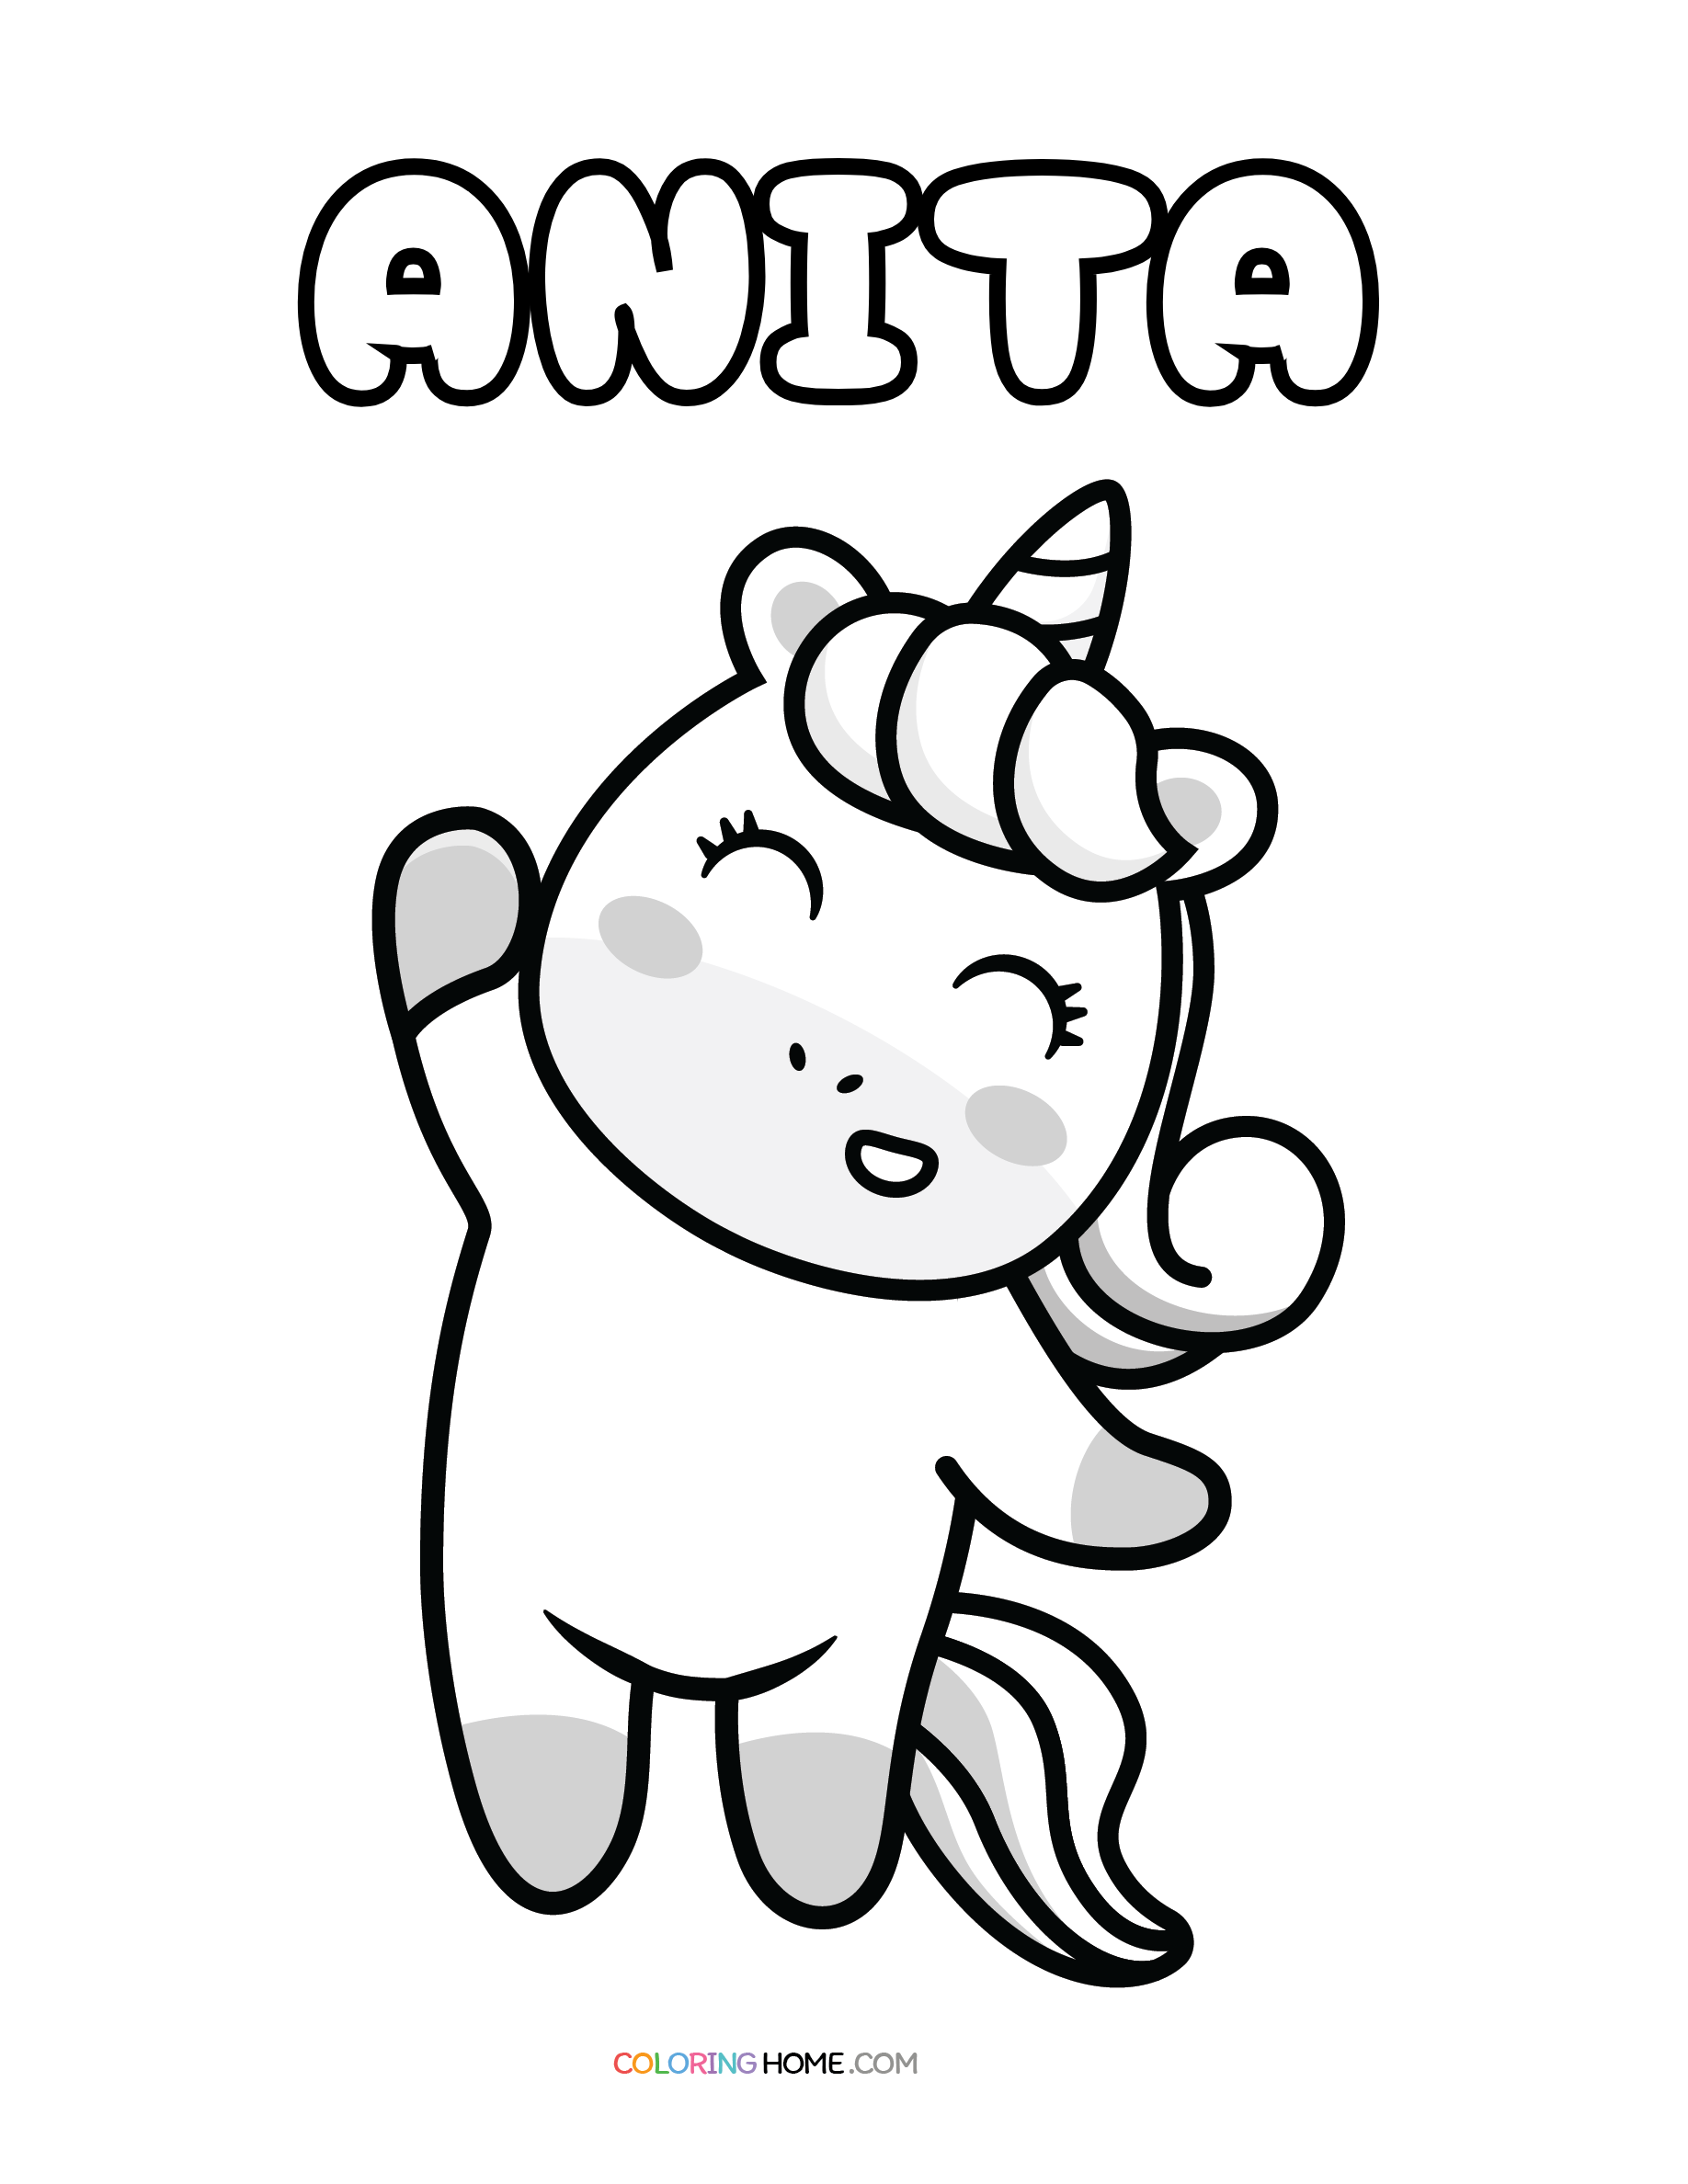 Anita unicorn coloring page